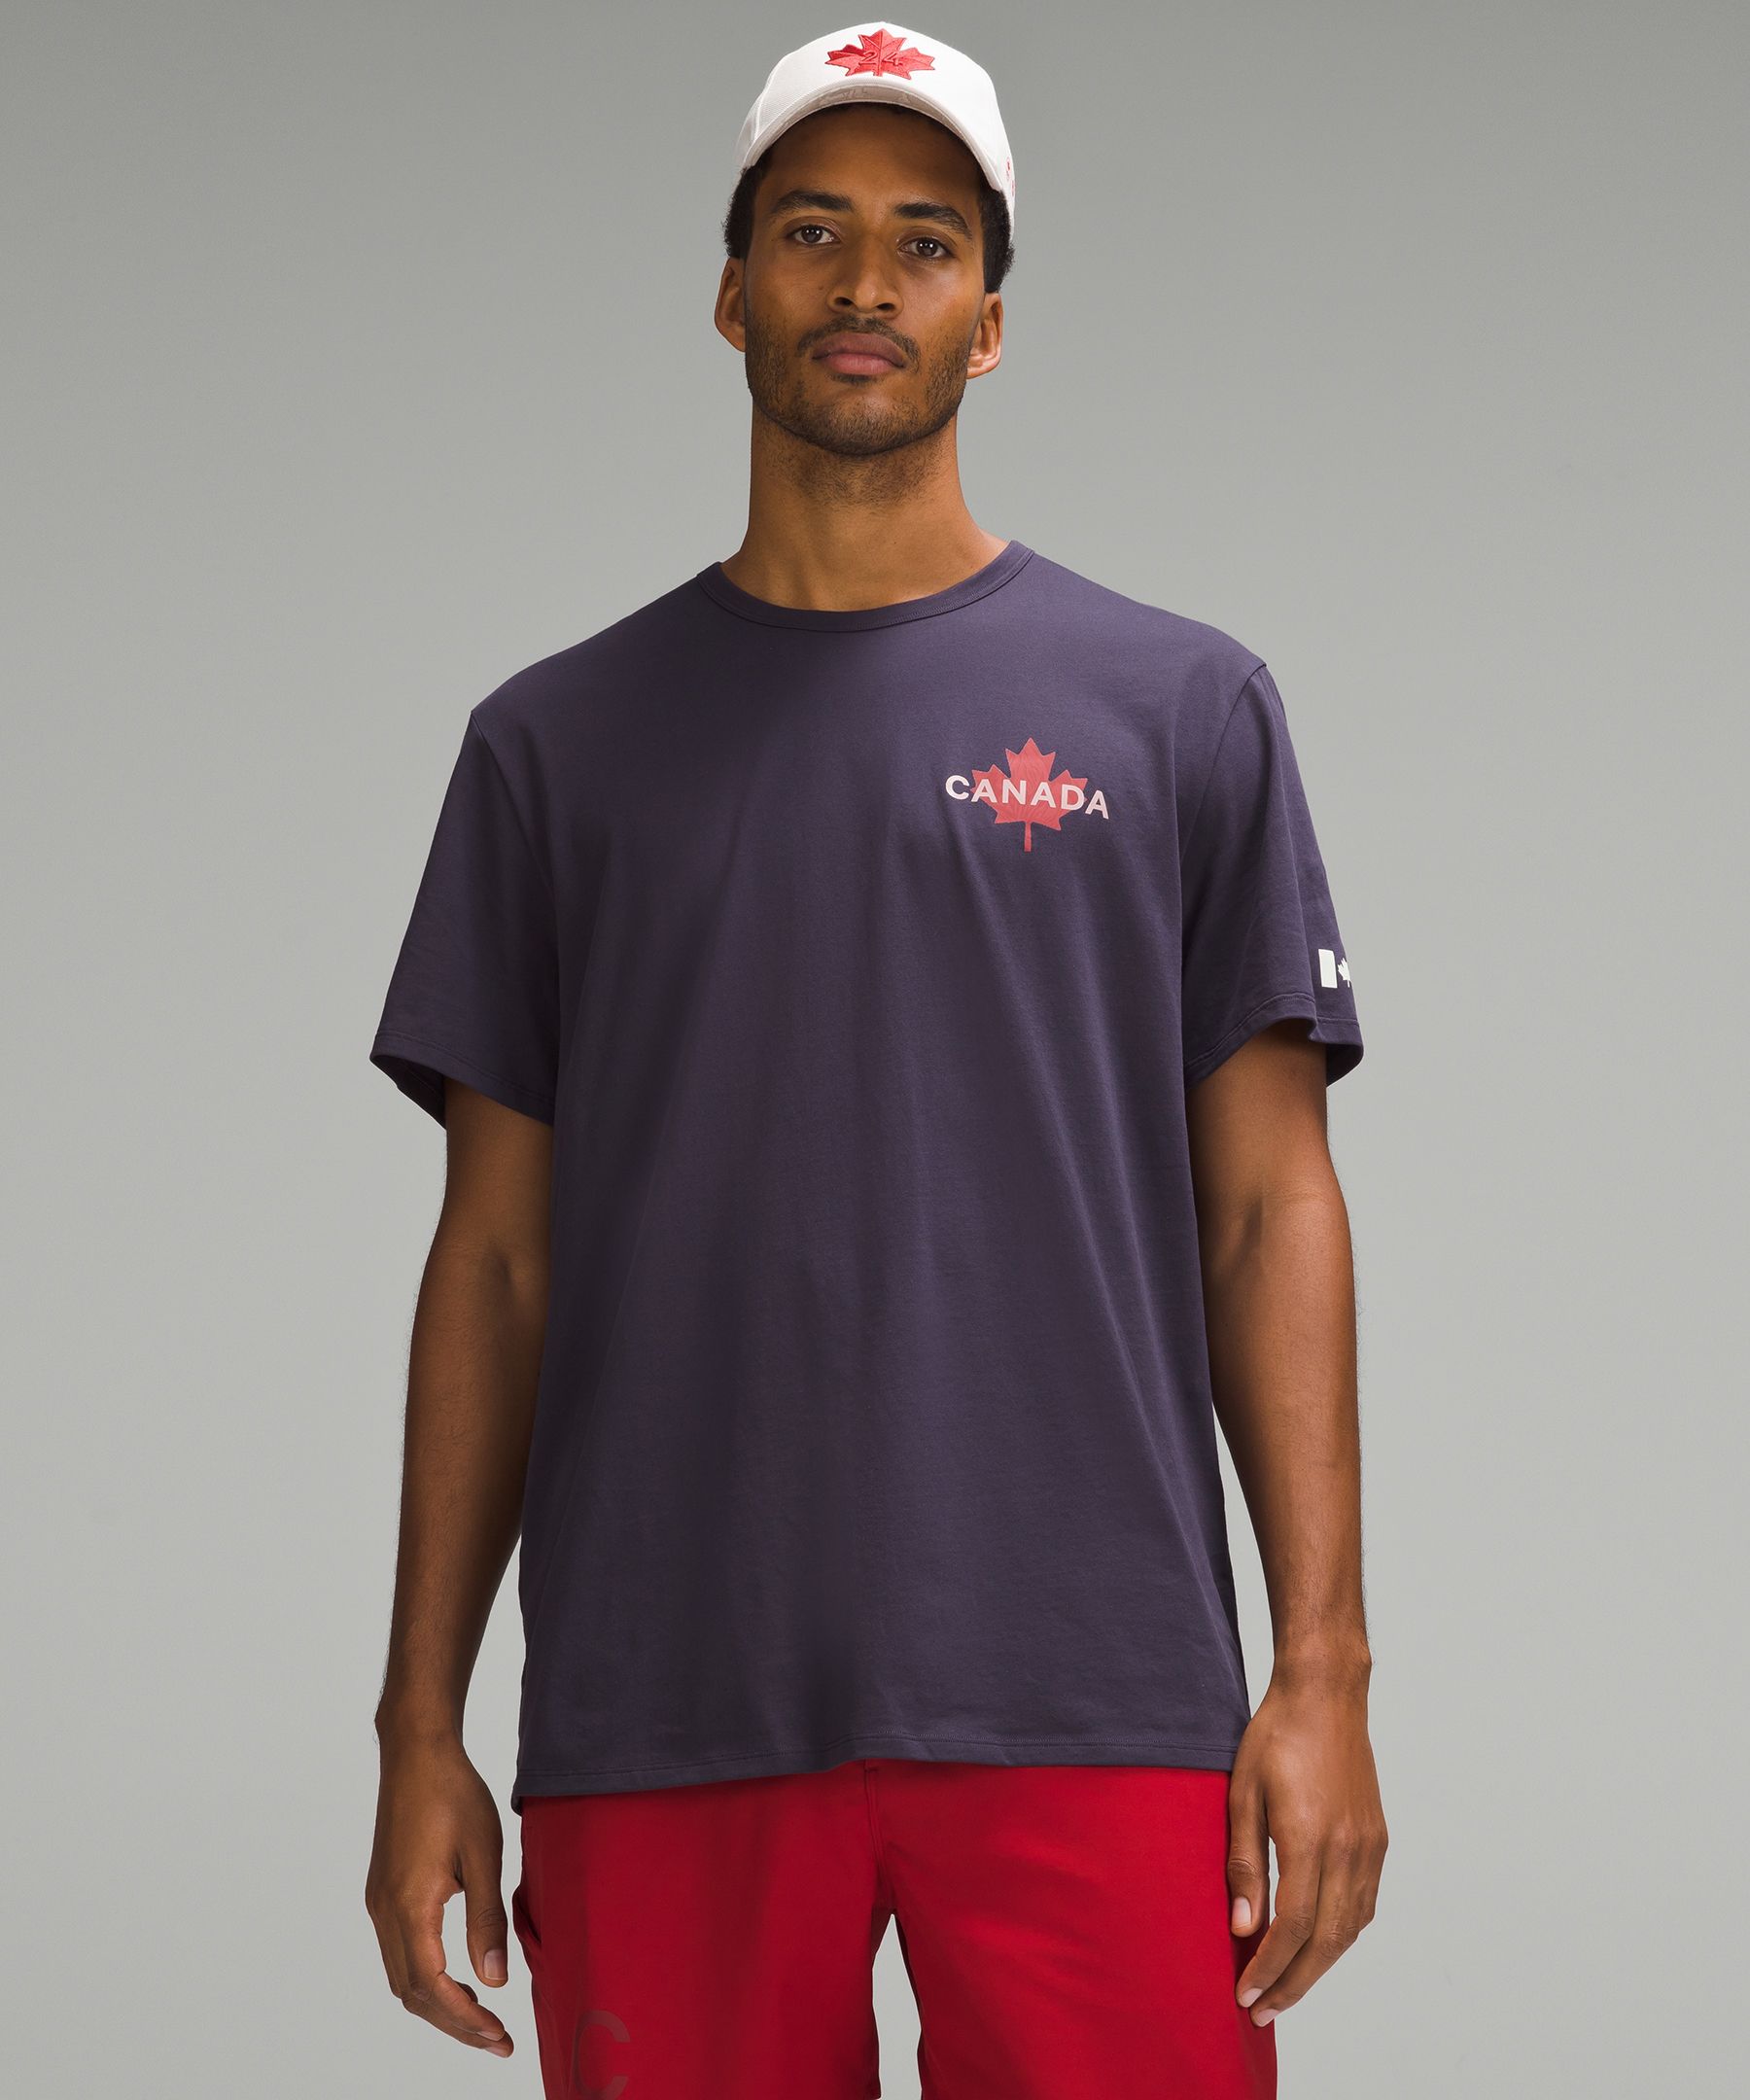 Team Canada Men's Cotton Jersey Graphic T-Shirt *CPC Logo | Short Sleeve Shirts & Tee's